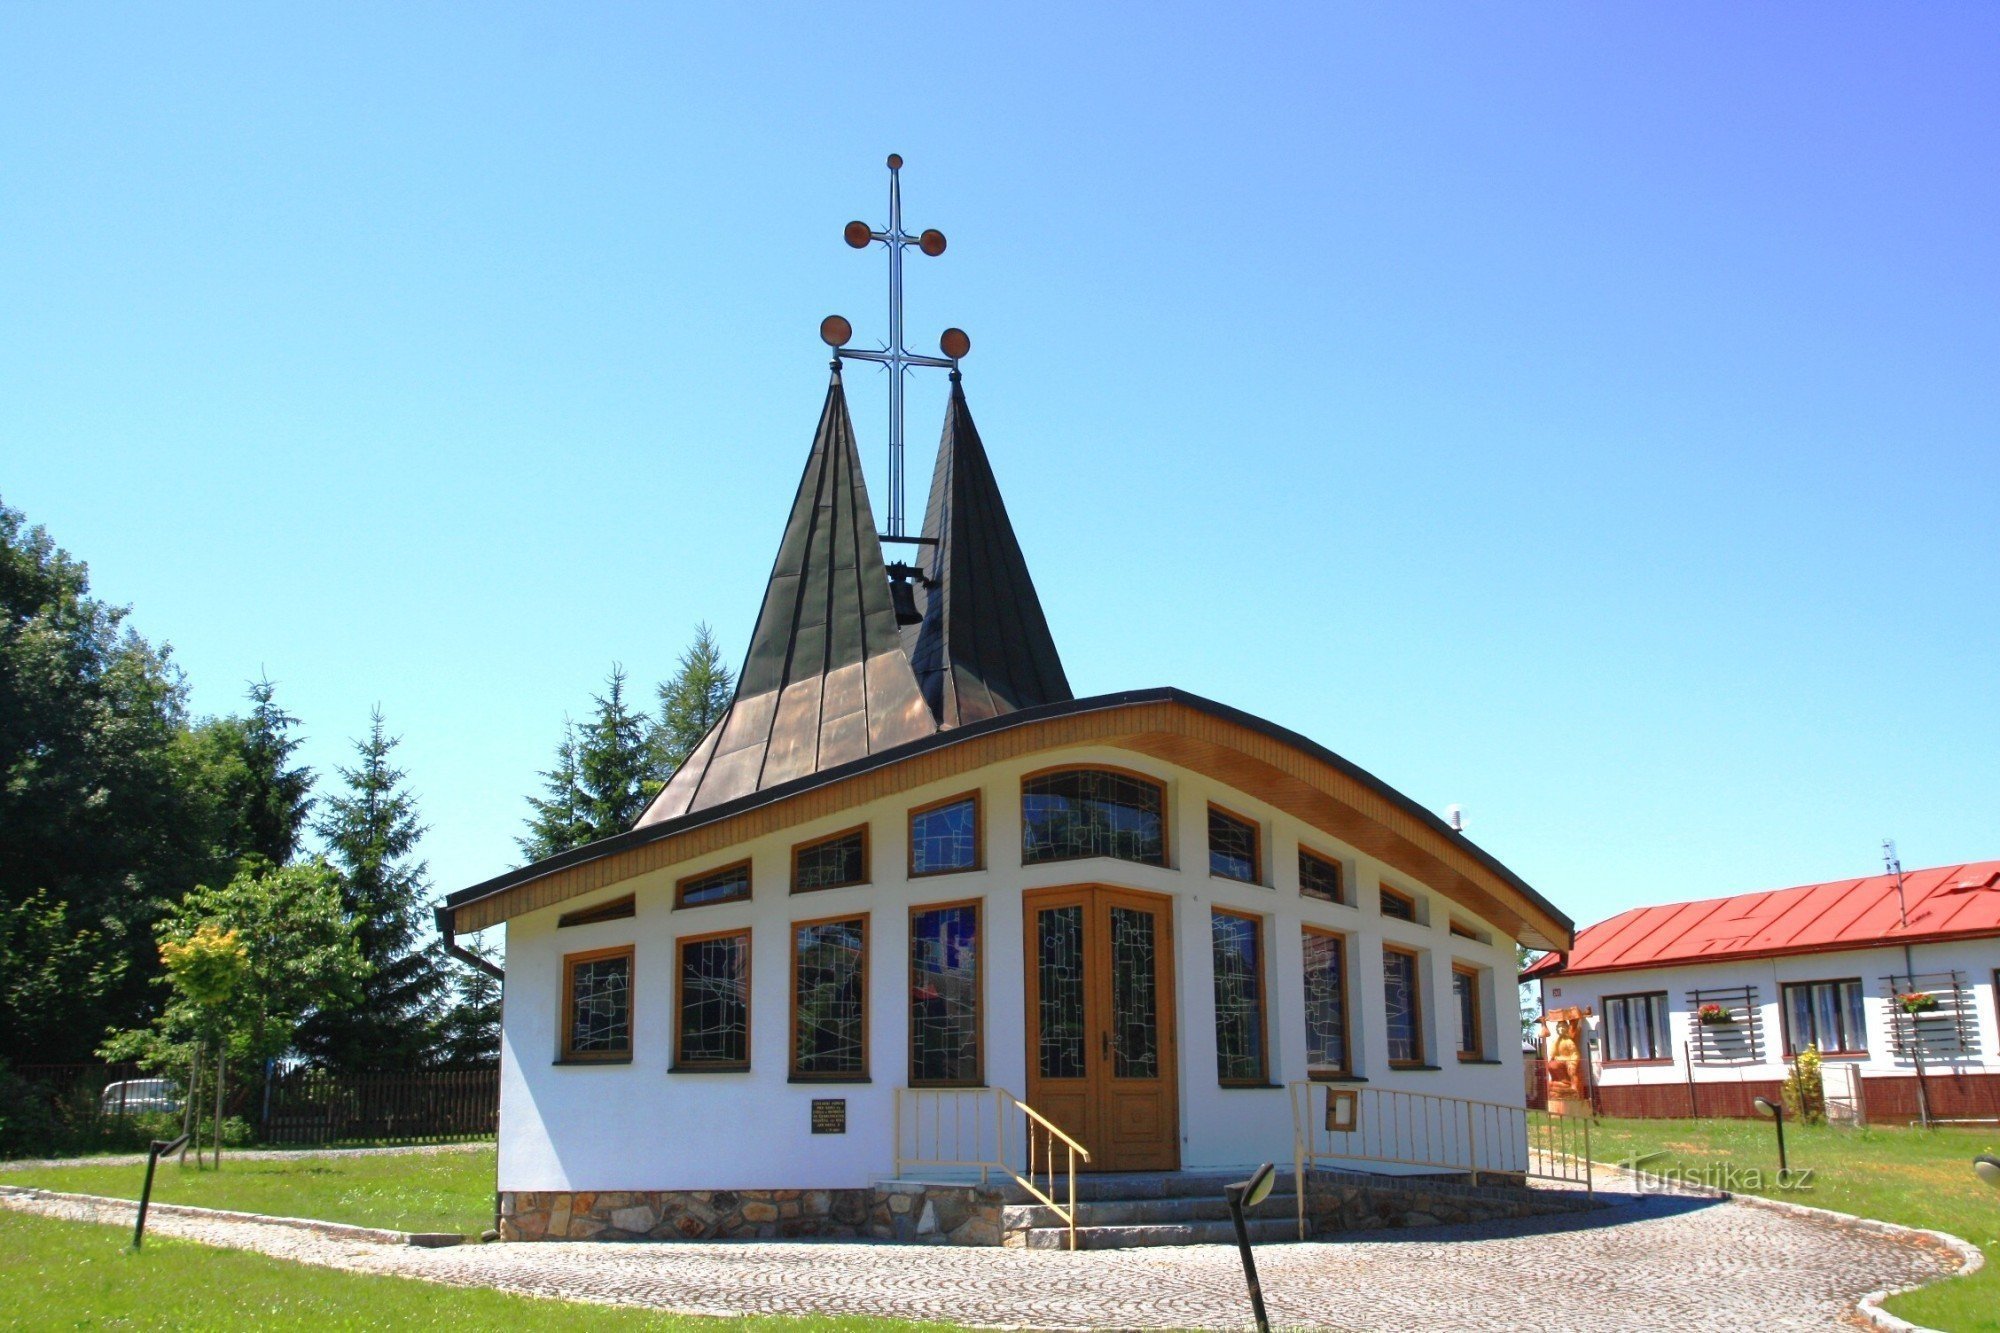 Škrdlovice - chapel of St. Cyril and Methodius